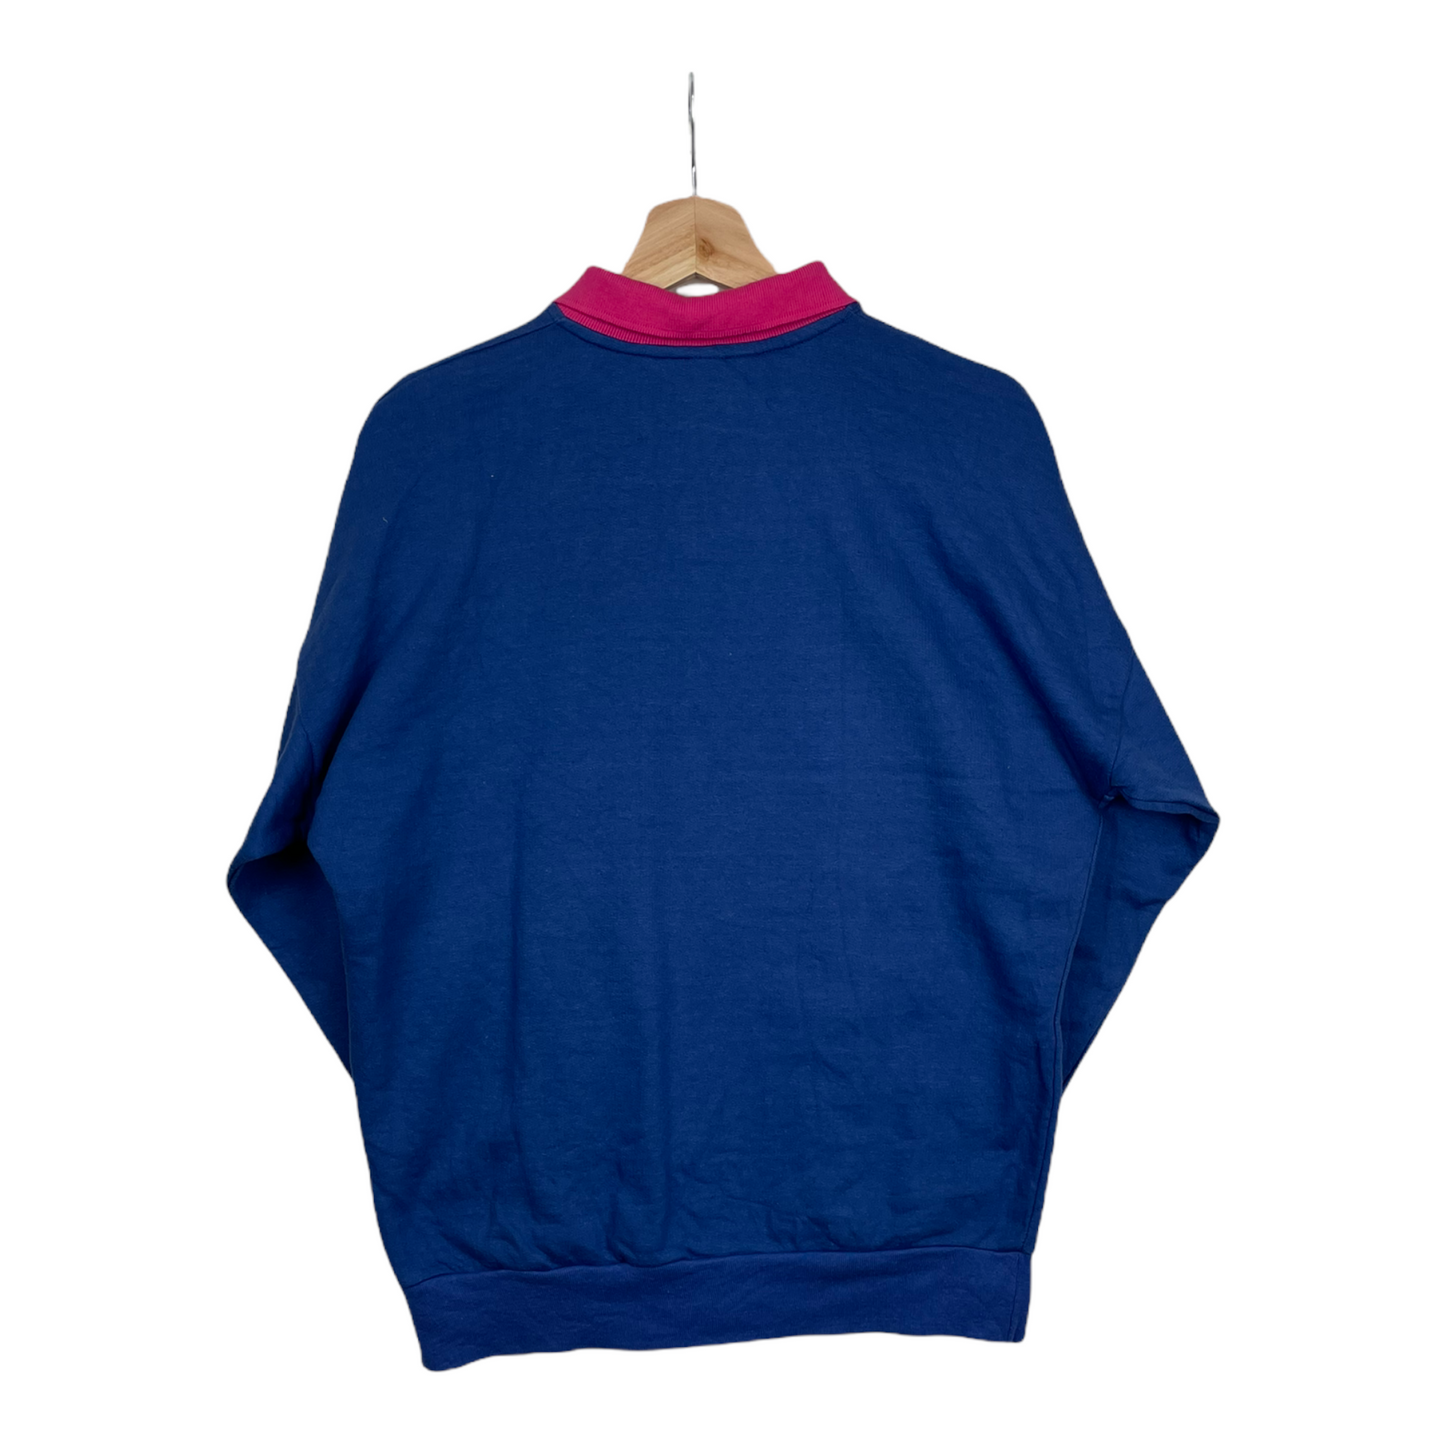 80s Unbranded Sweatshirt Blue Pink